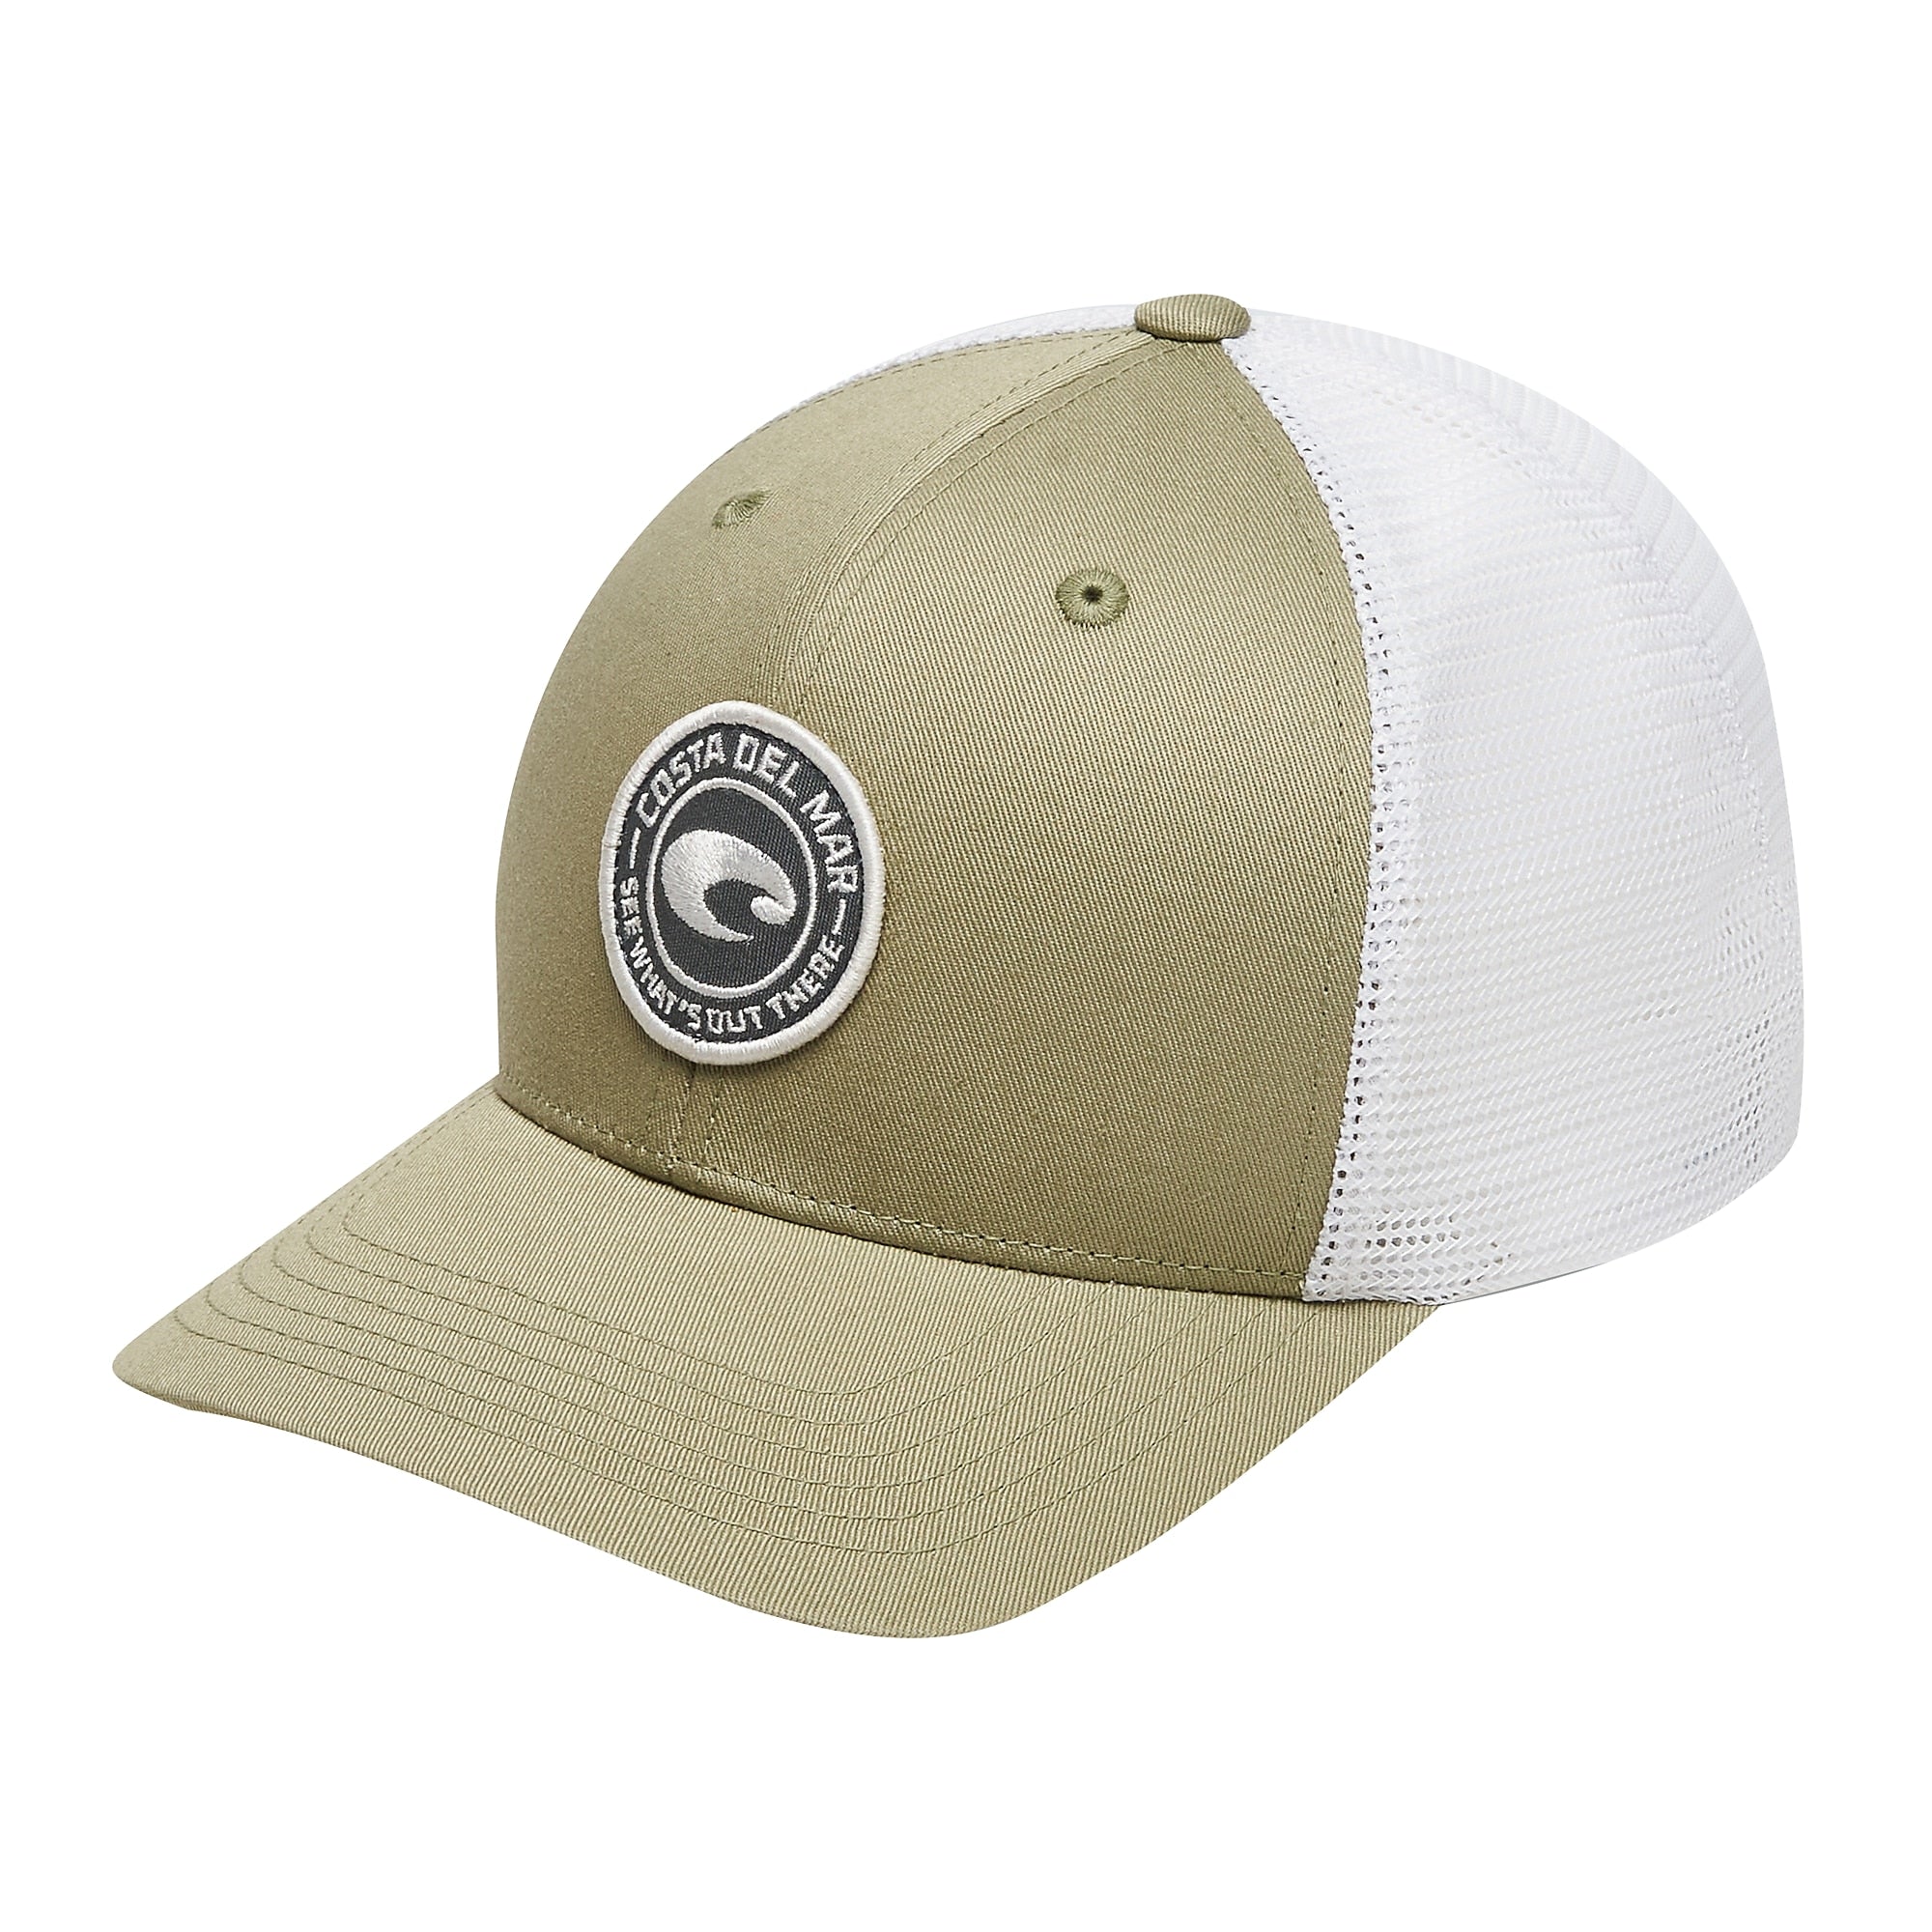 Costa® Stitched Trucker Hat - Men's Hats in Working Brown